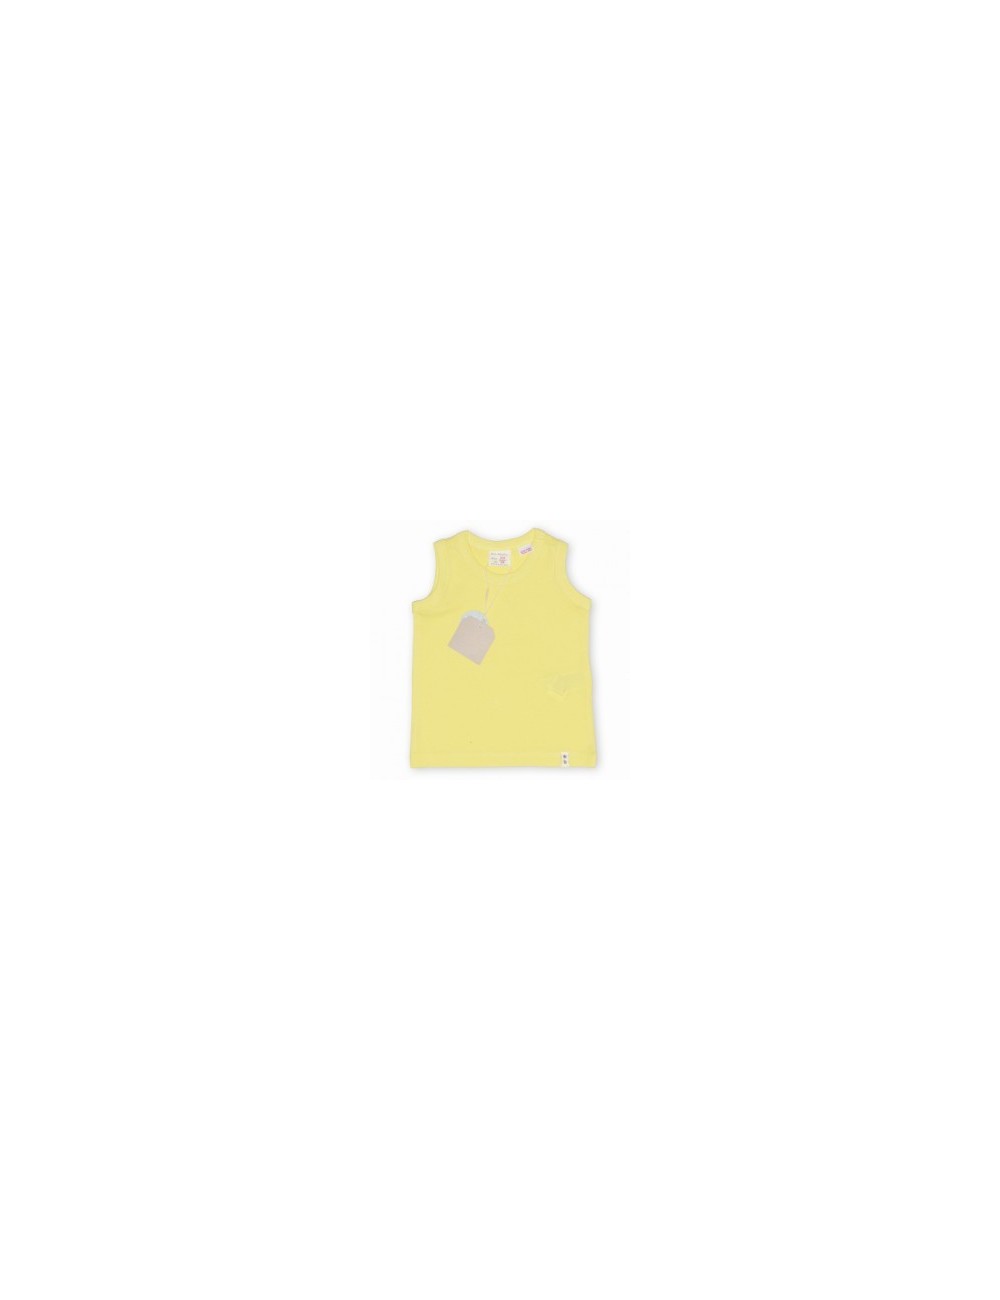 Tricouri Zara fara maneci, copii 3 -12 ani, galben